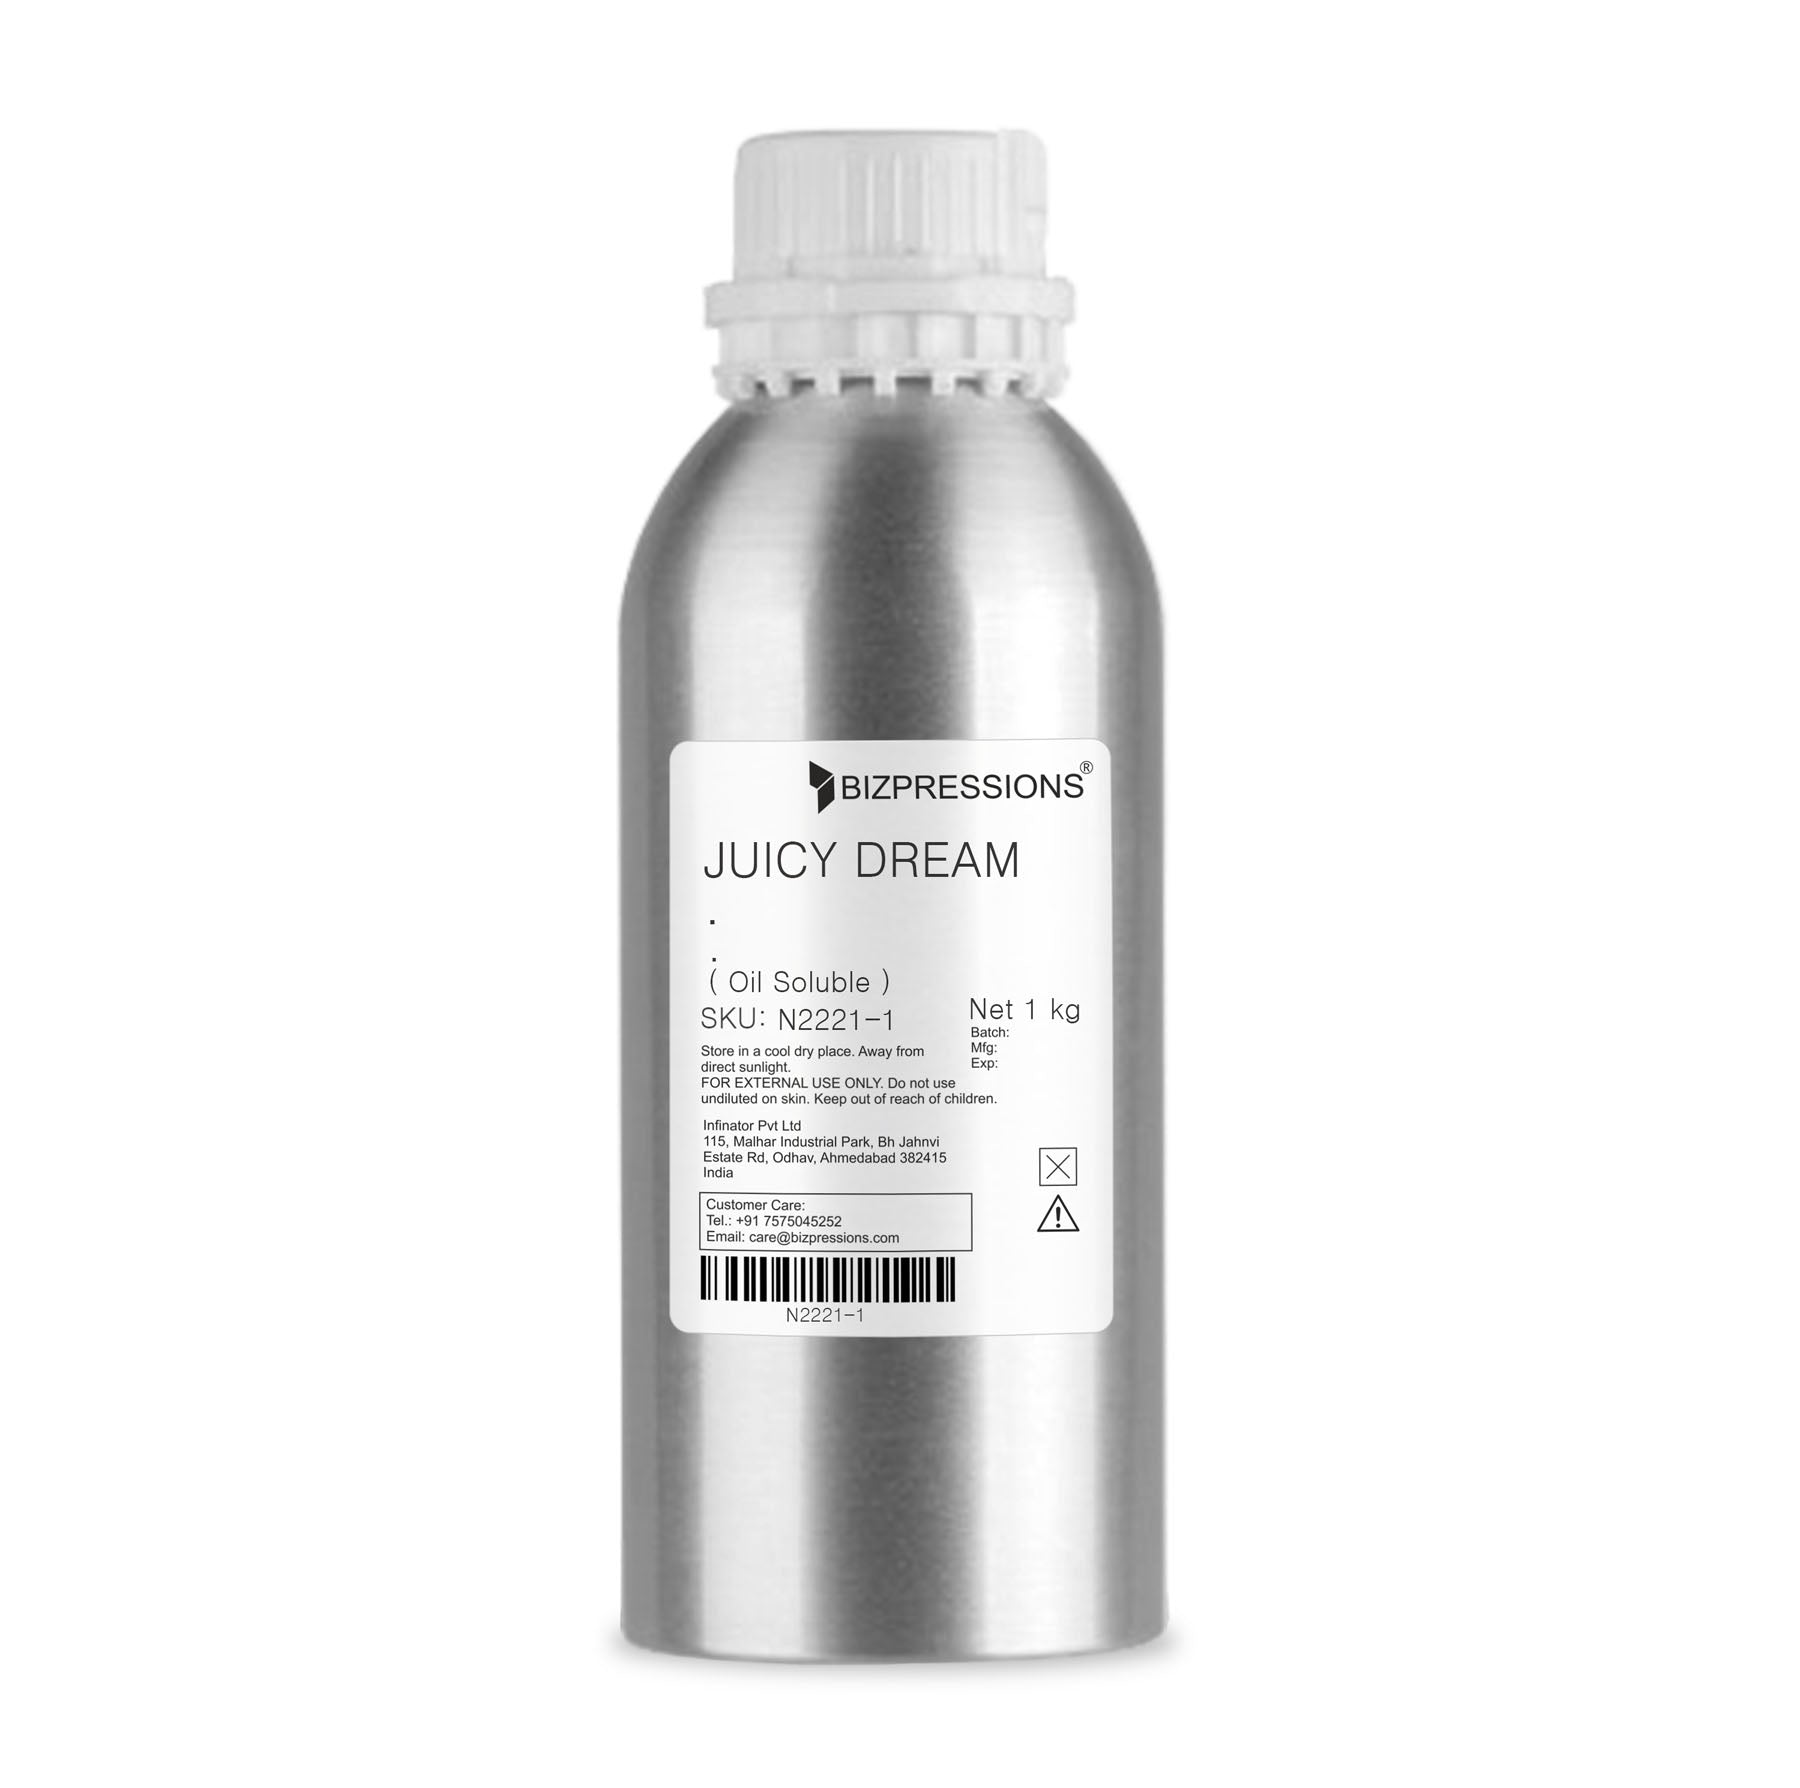 JUICY DREAM - Fragrance ( Oil Soluble ) - 1 kg